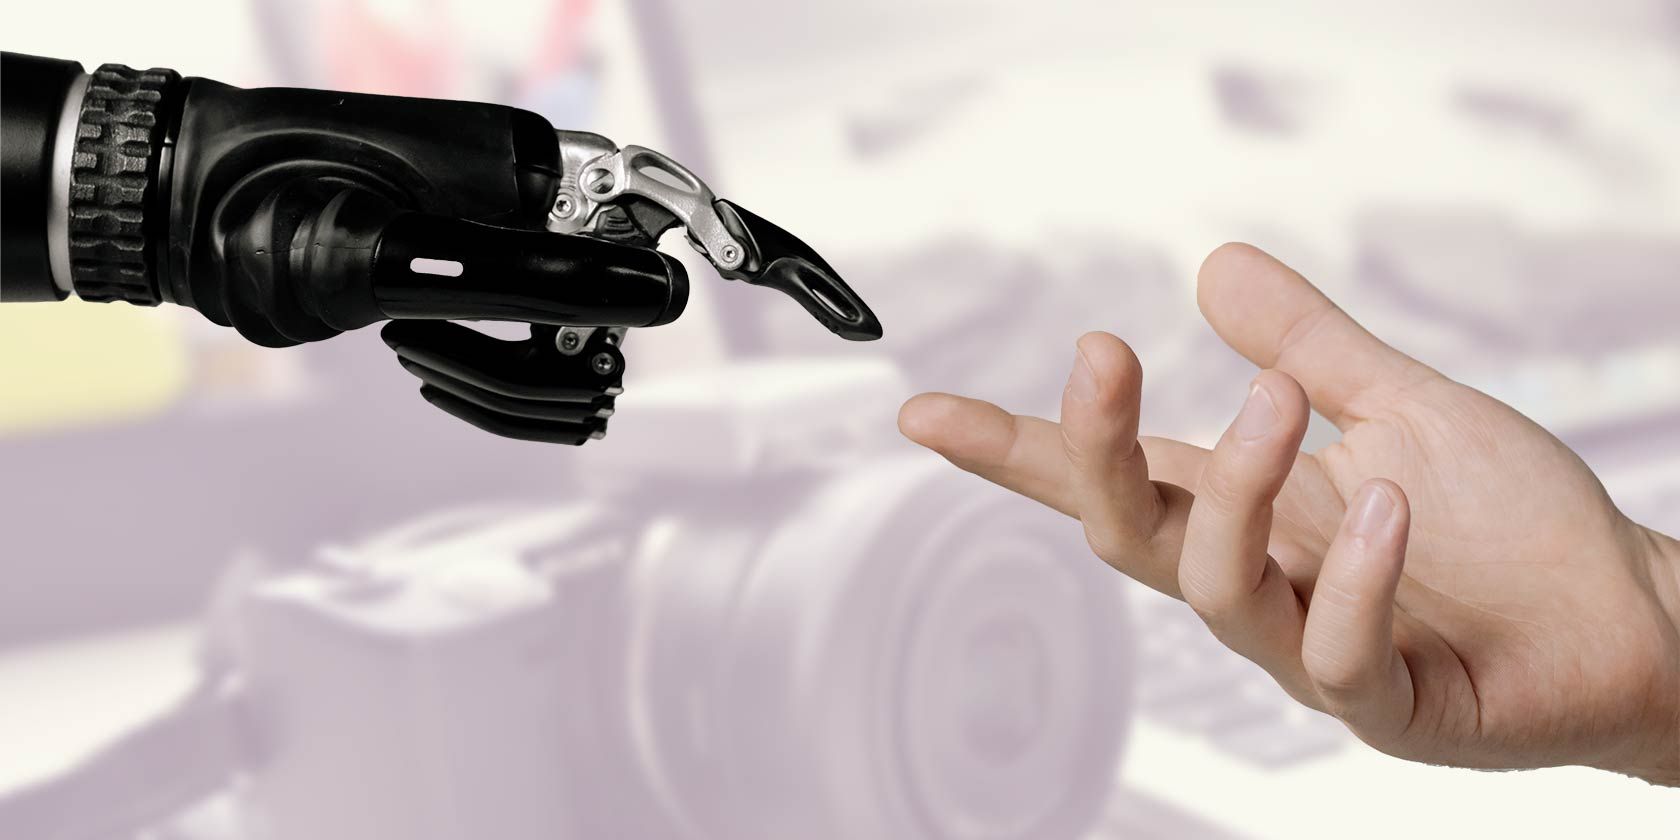 Robot and Human Hands